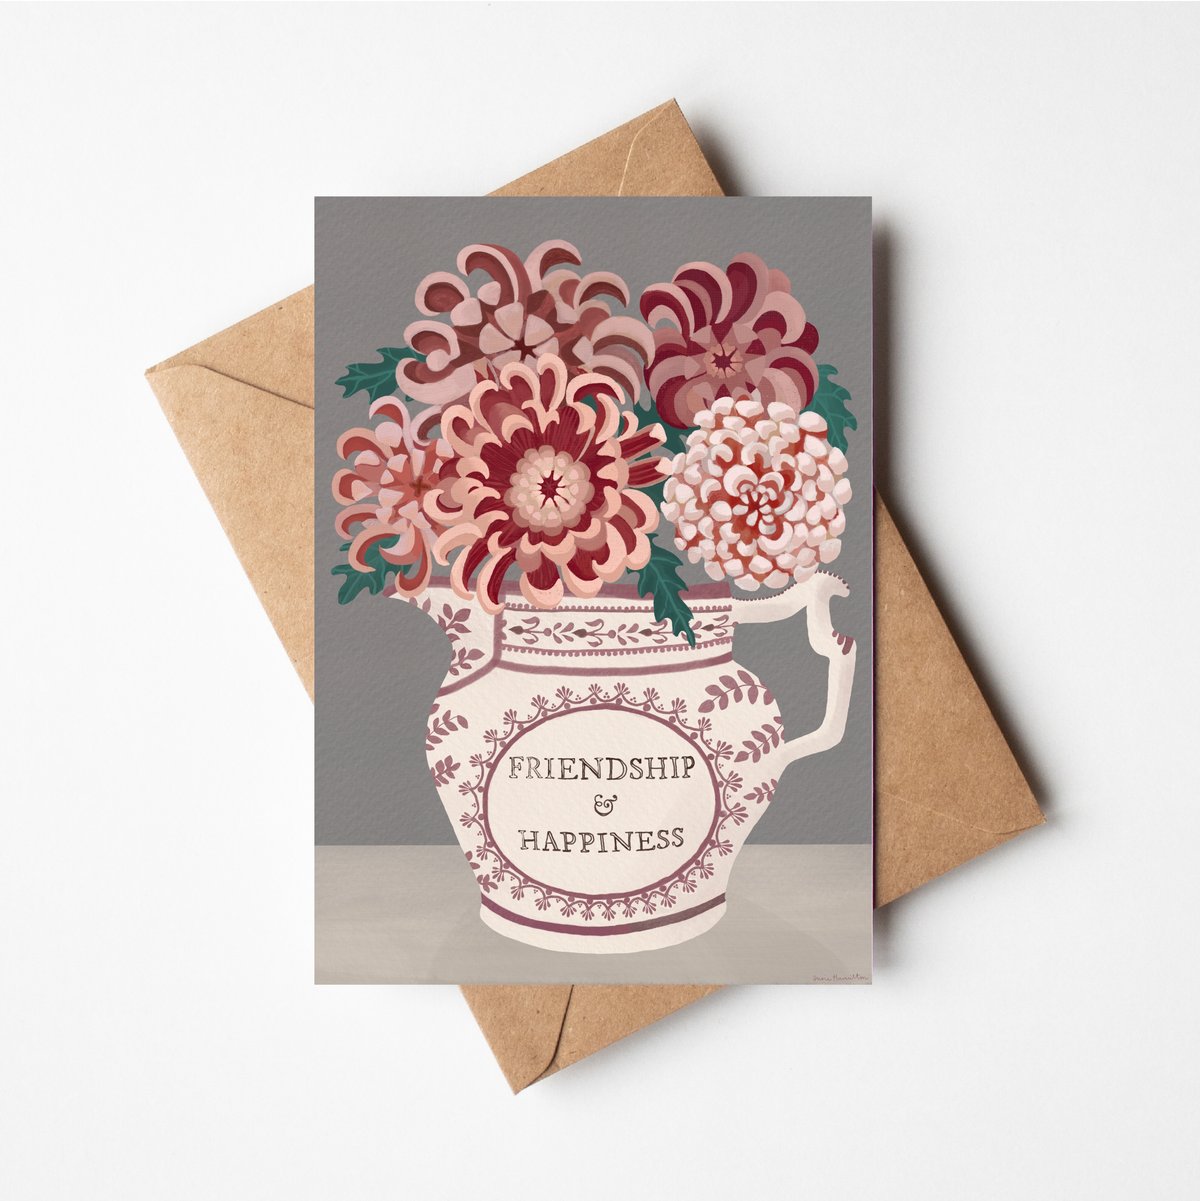 Chrysanthemums in Happiness Jug Print & Card